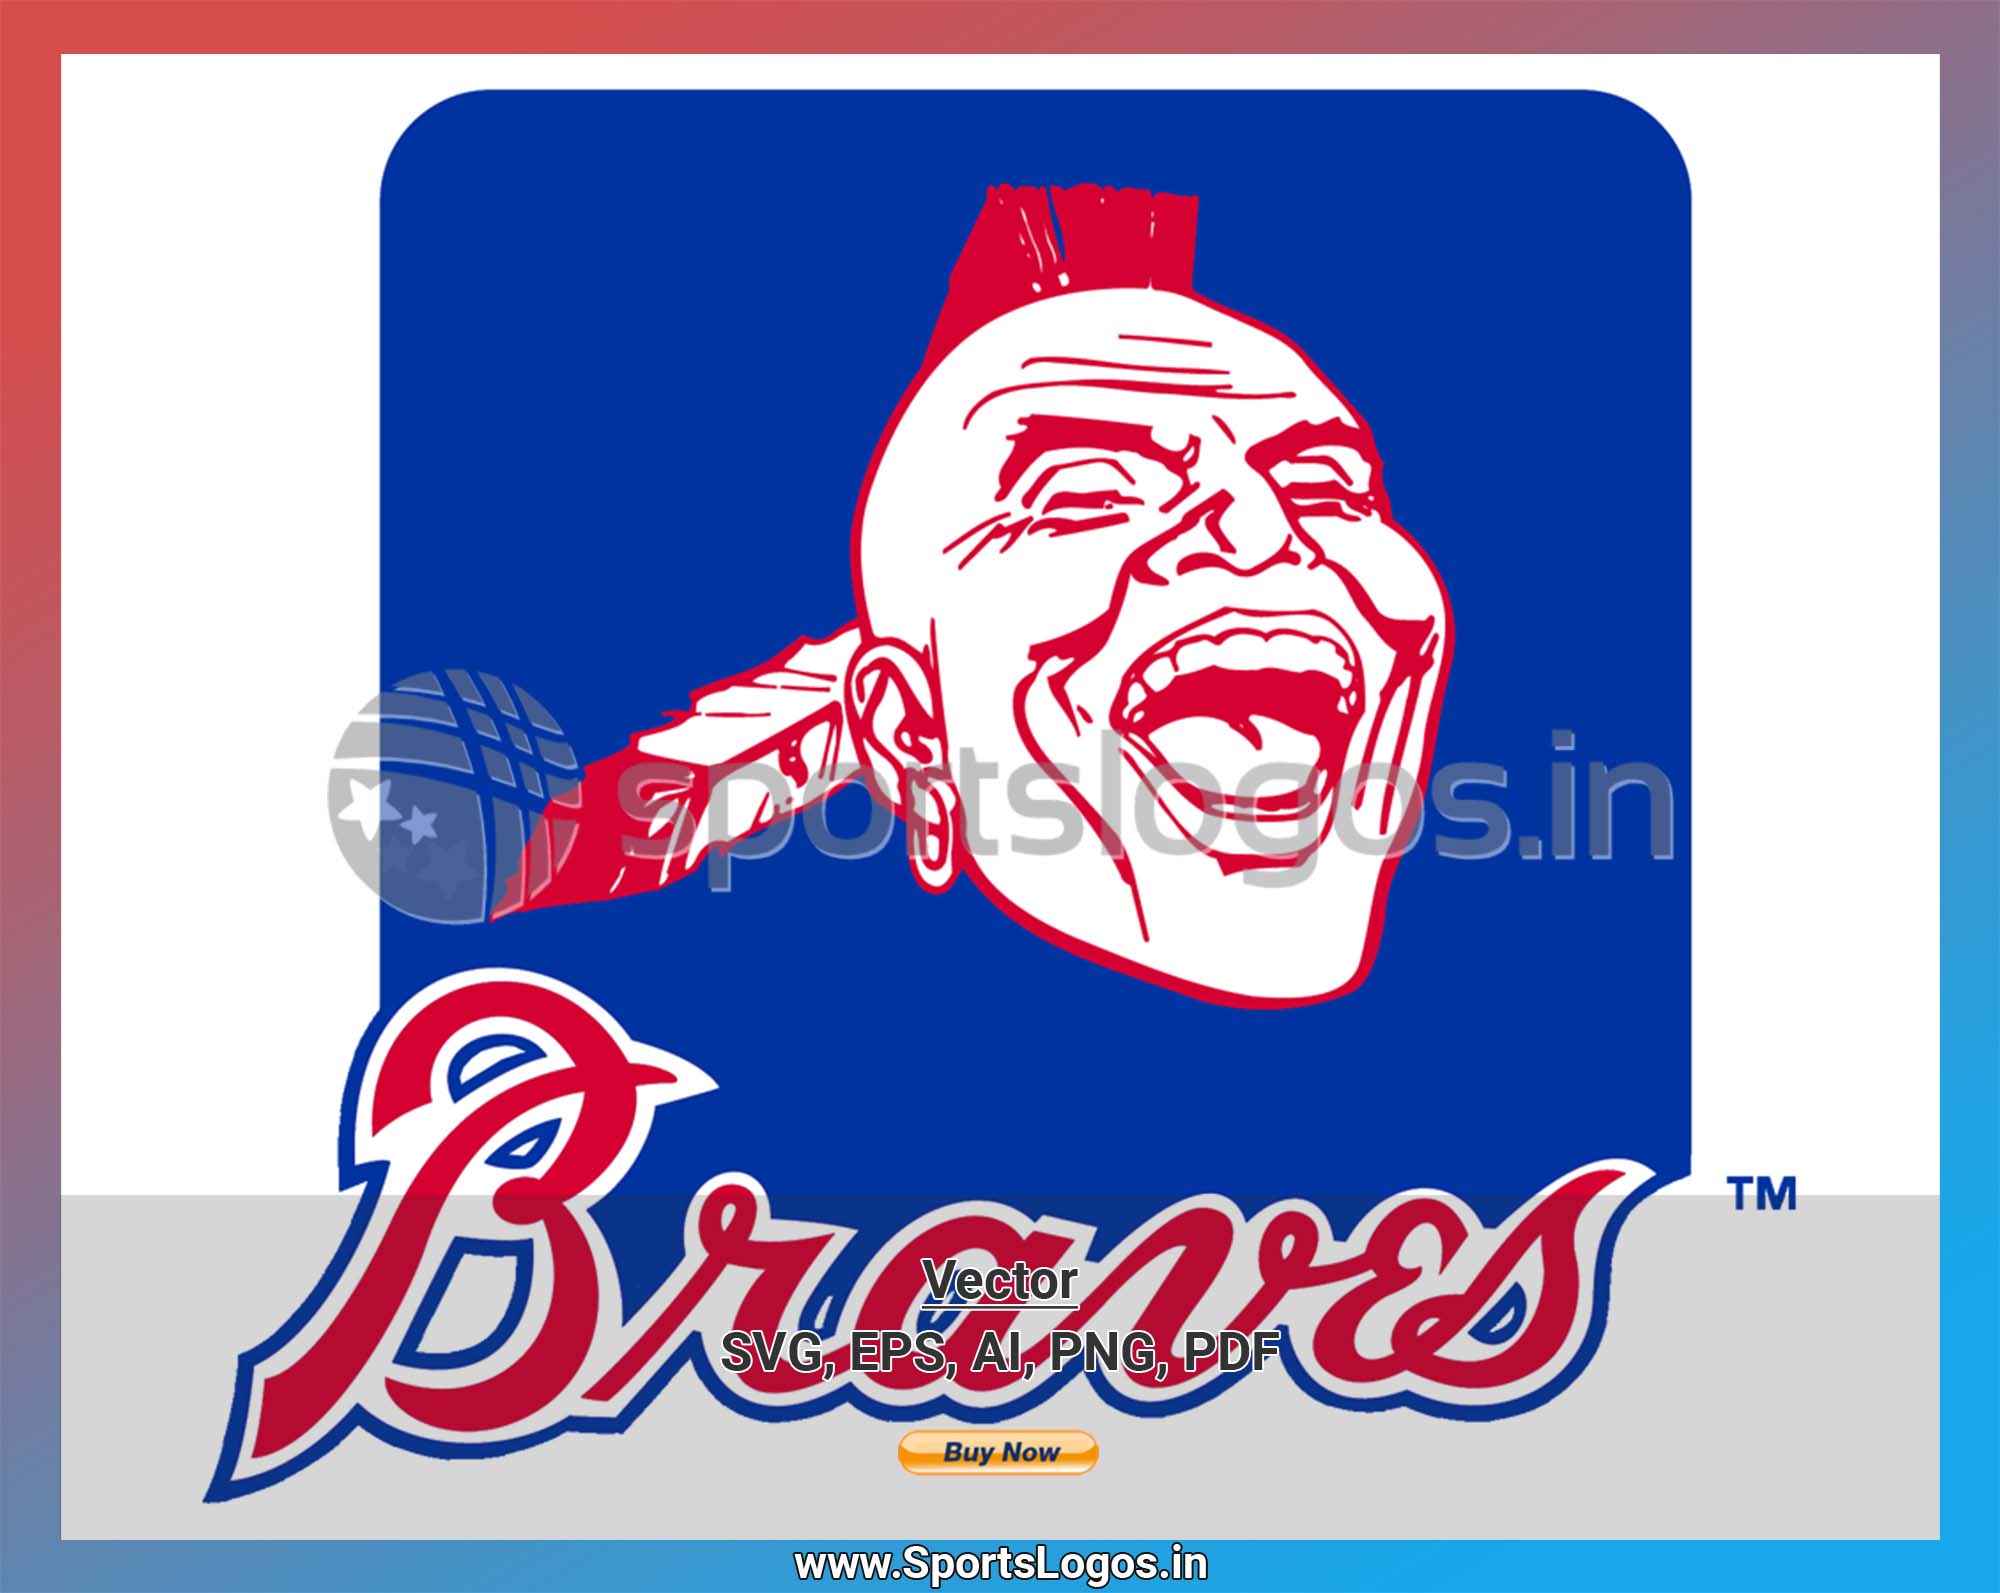 Atlanta Braves Logo, Braves Svg Cut Files, Layered Svg Files - Inspire  Uplift